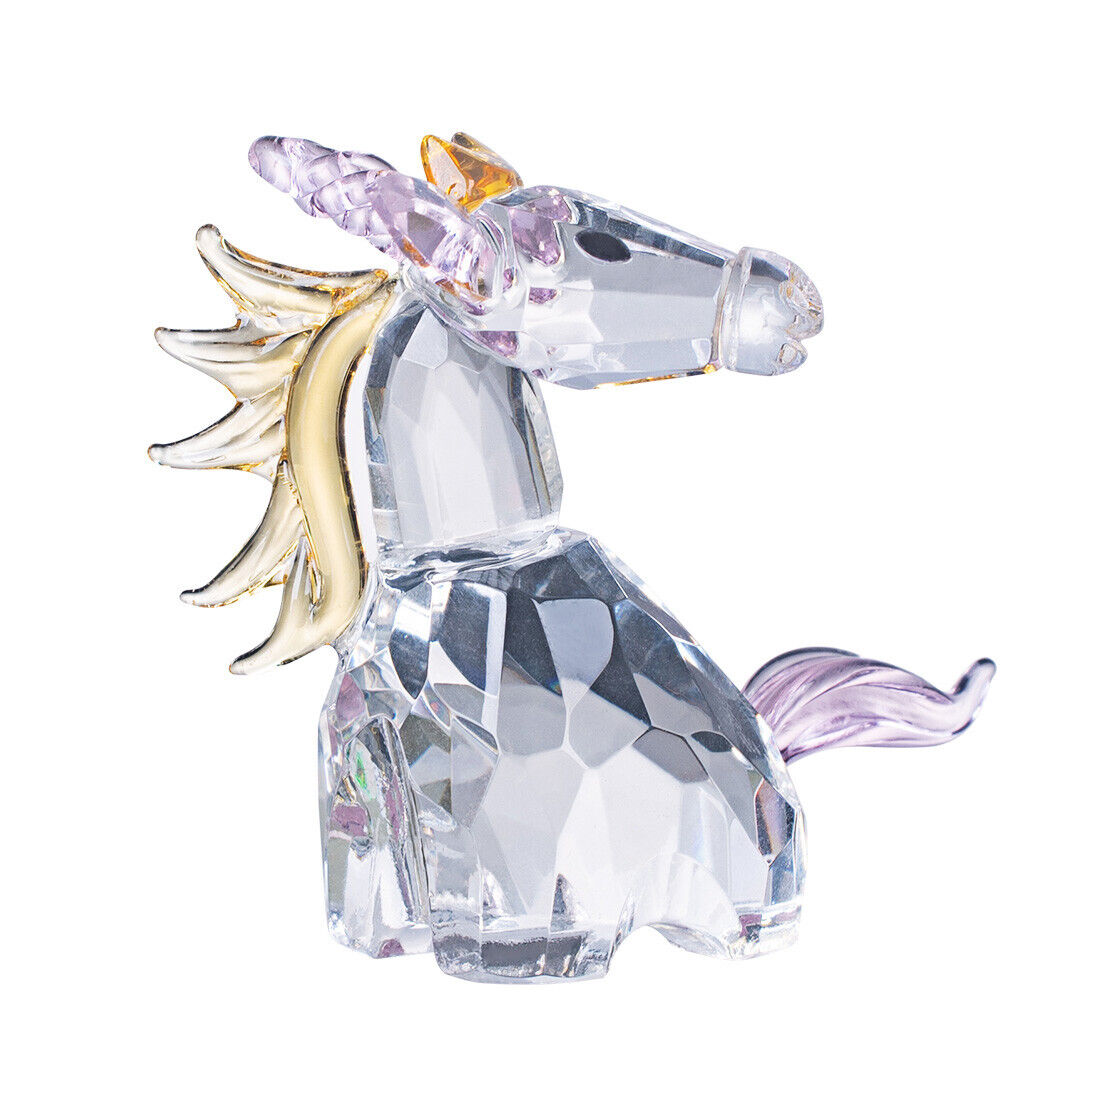 Crystal Unicorn Figurine Collectible Cut Glass Animal Ornament Home Decor